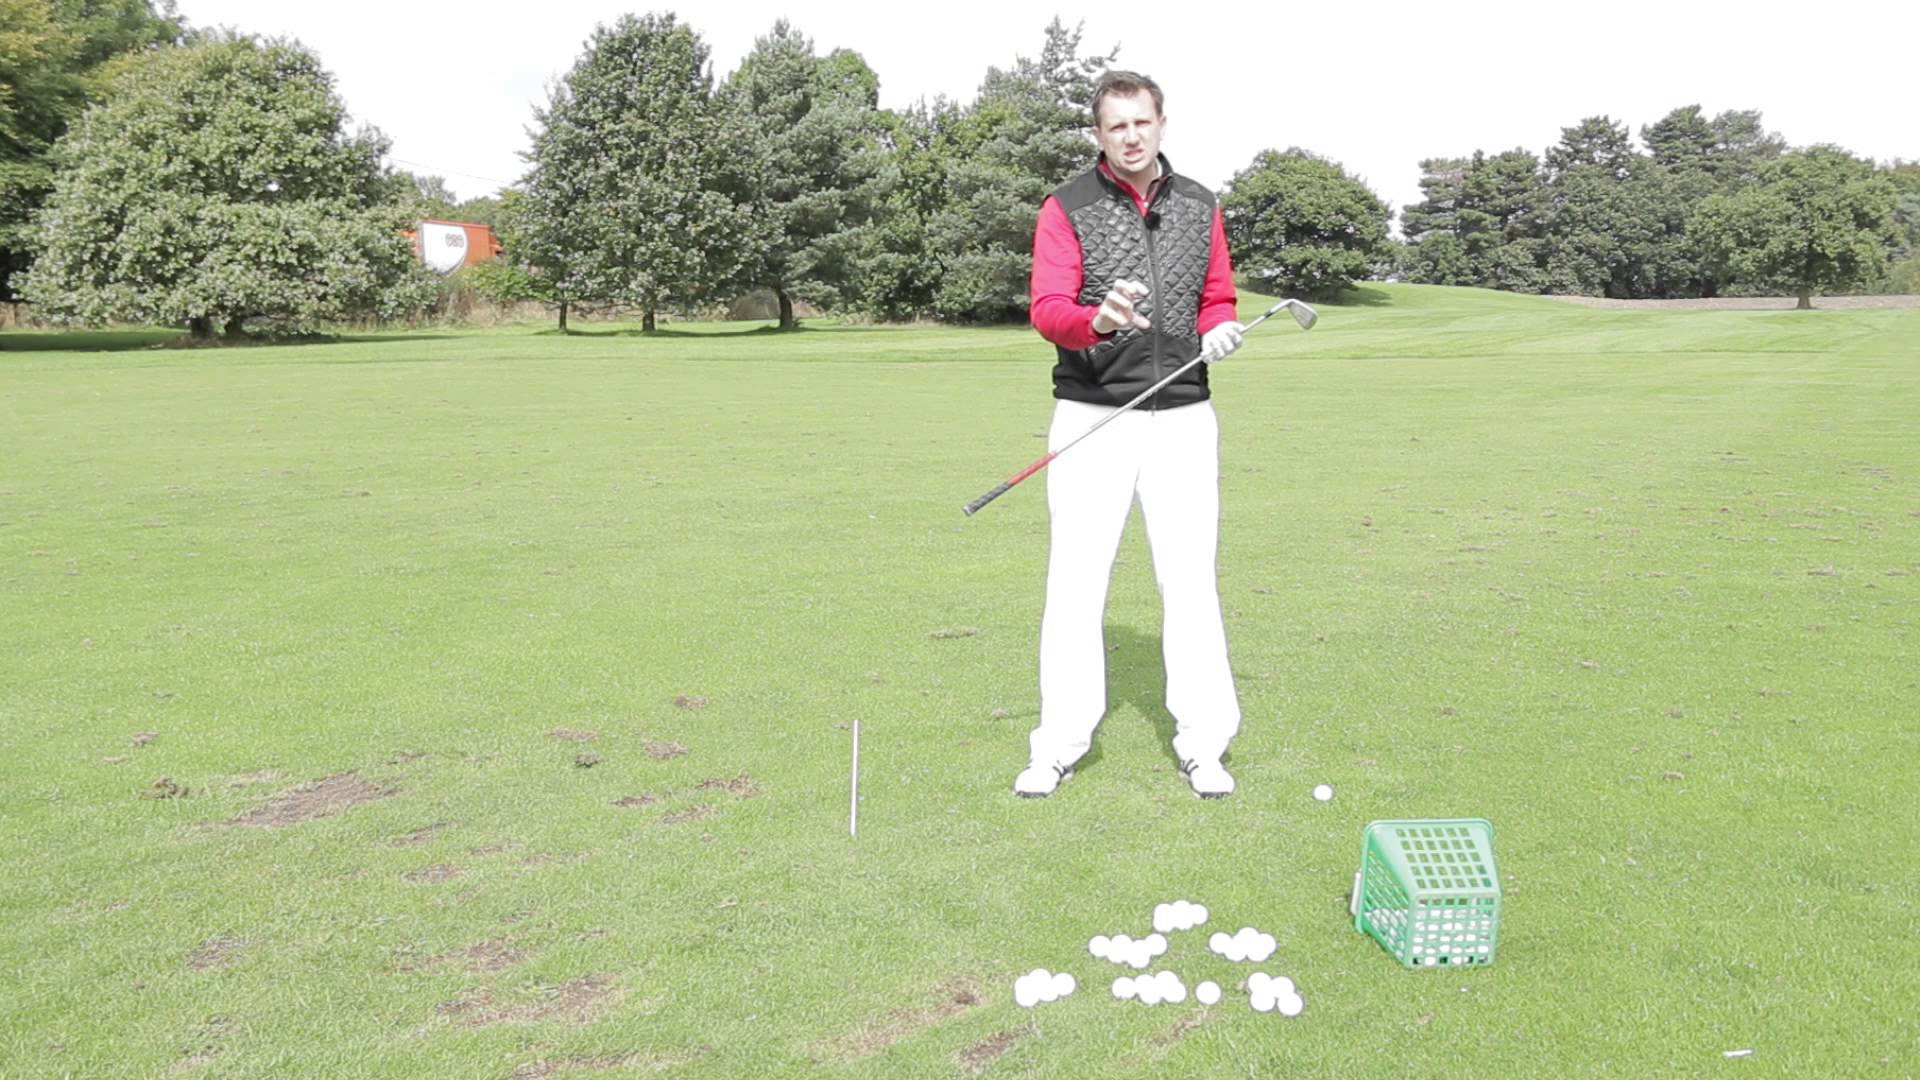 Effective Practice - Golf Range Drill - YouTube